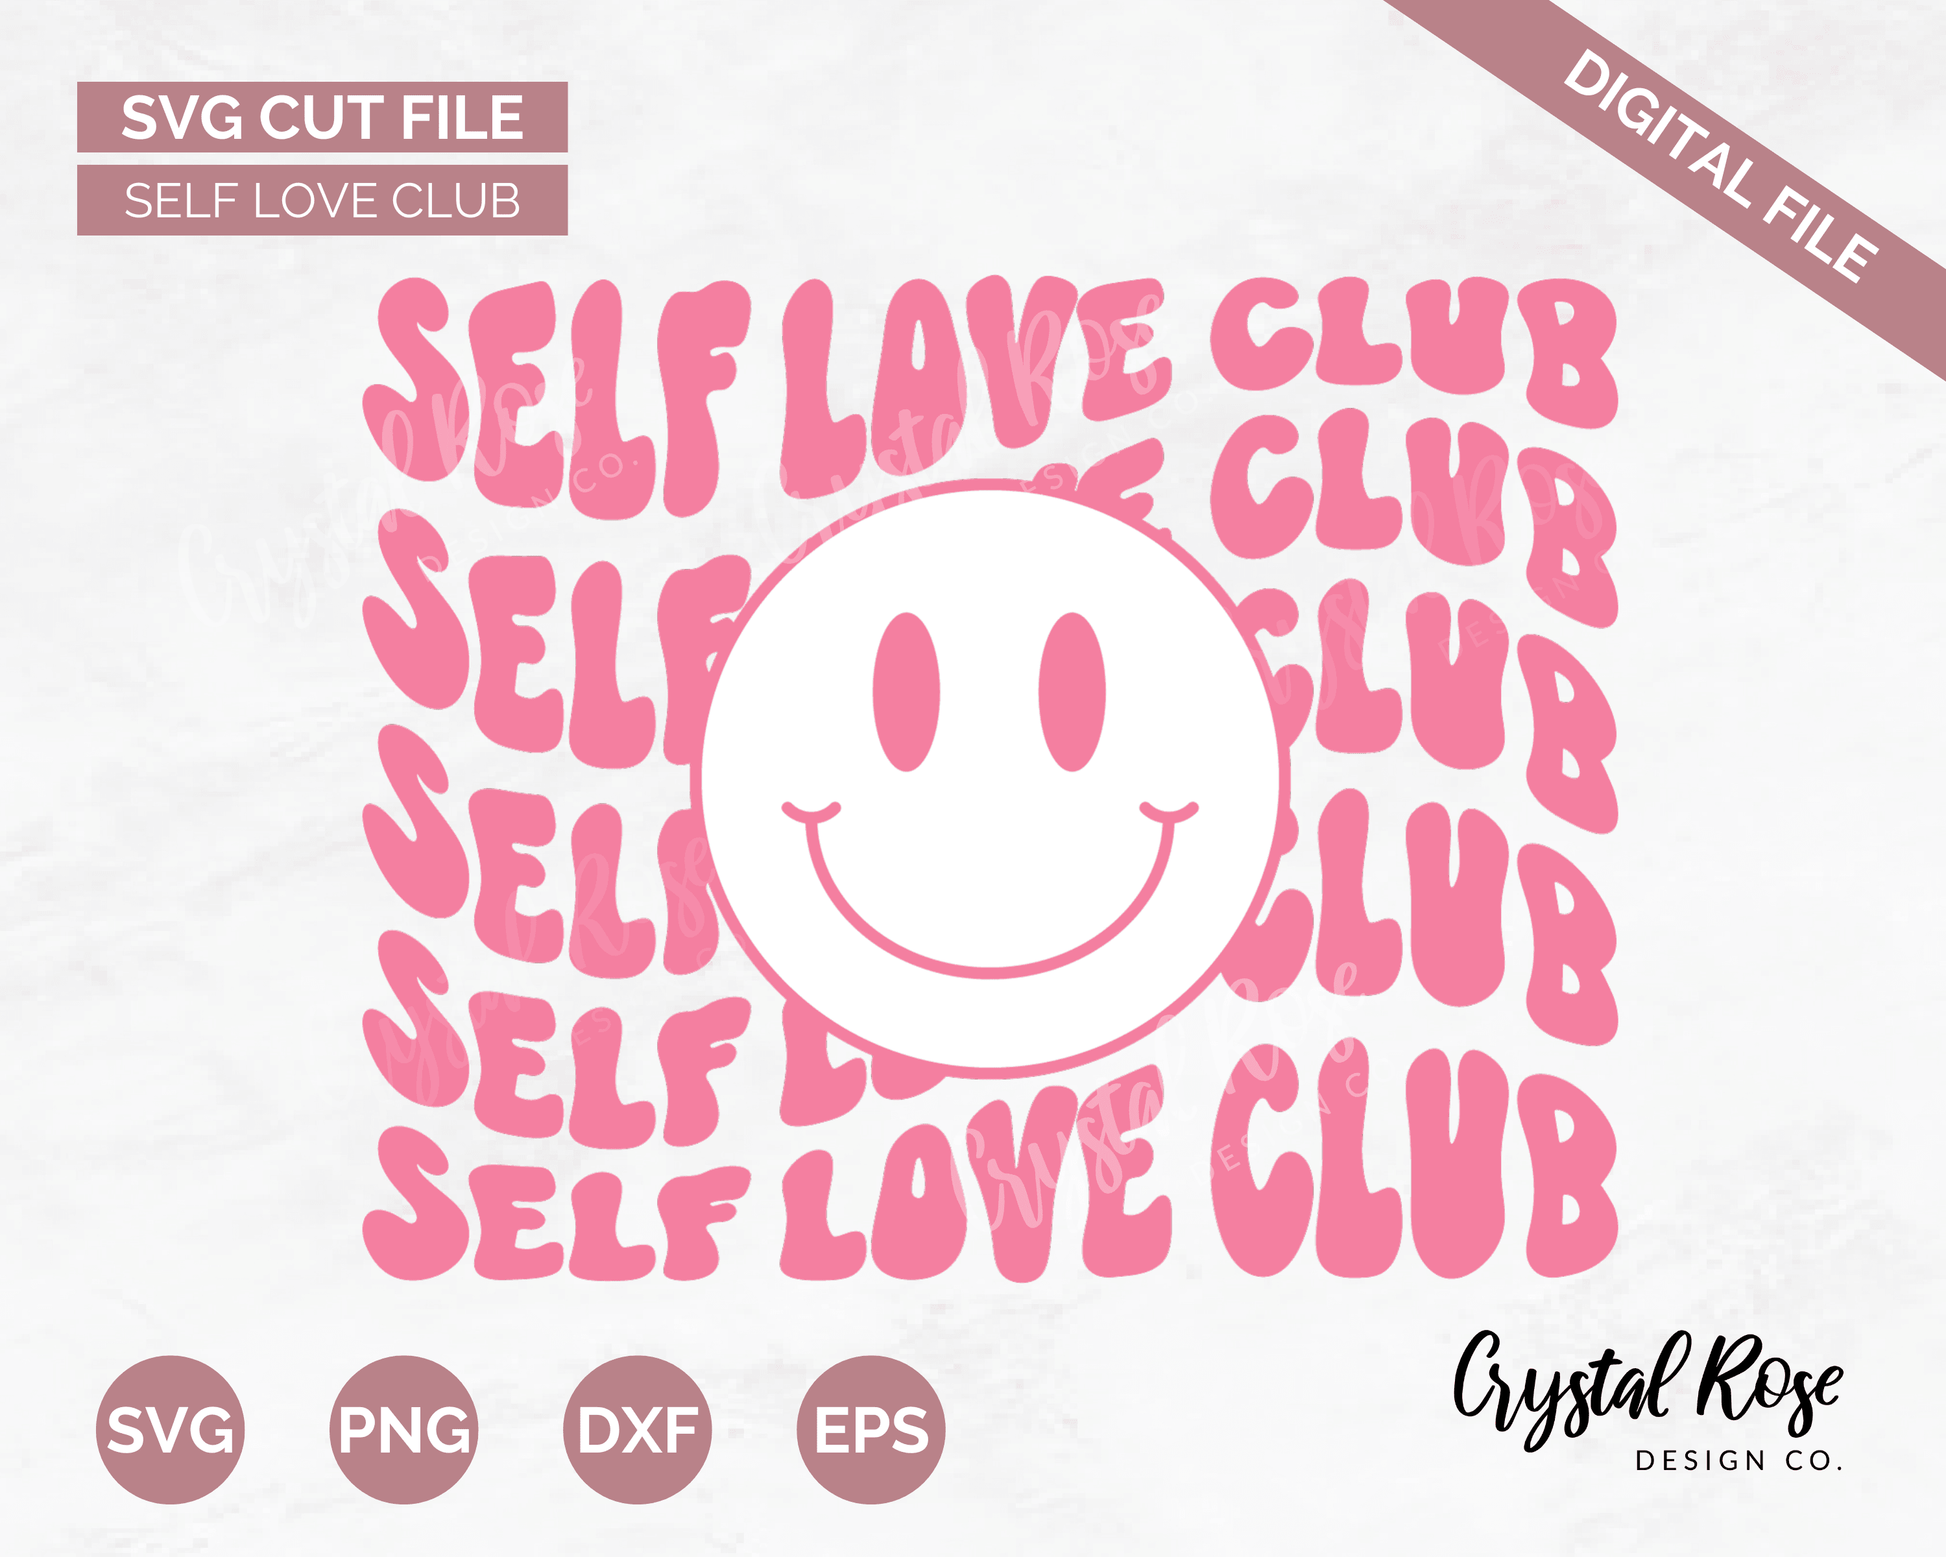 Self Love Club SVG, Inspirational SVG, Digital Download, Cricut, Silhouette, Glowforge (includes svg/png/dxf/eps) - Crystal Rose Design Co.